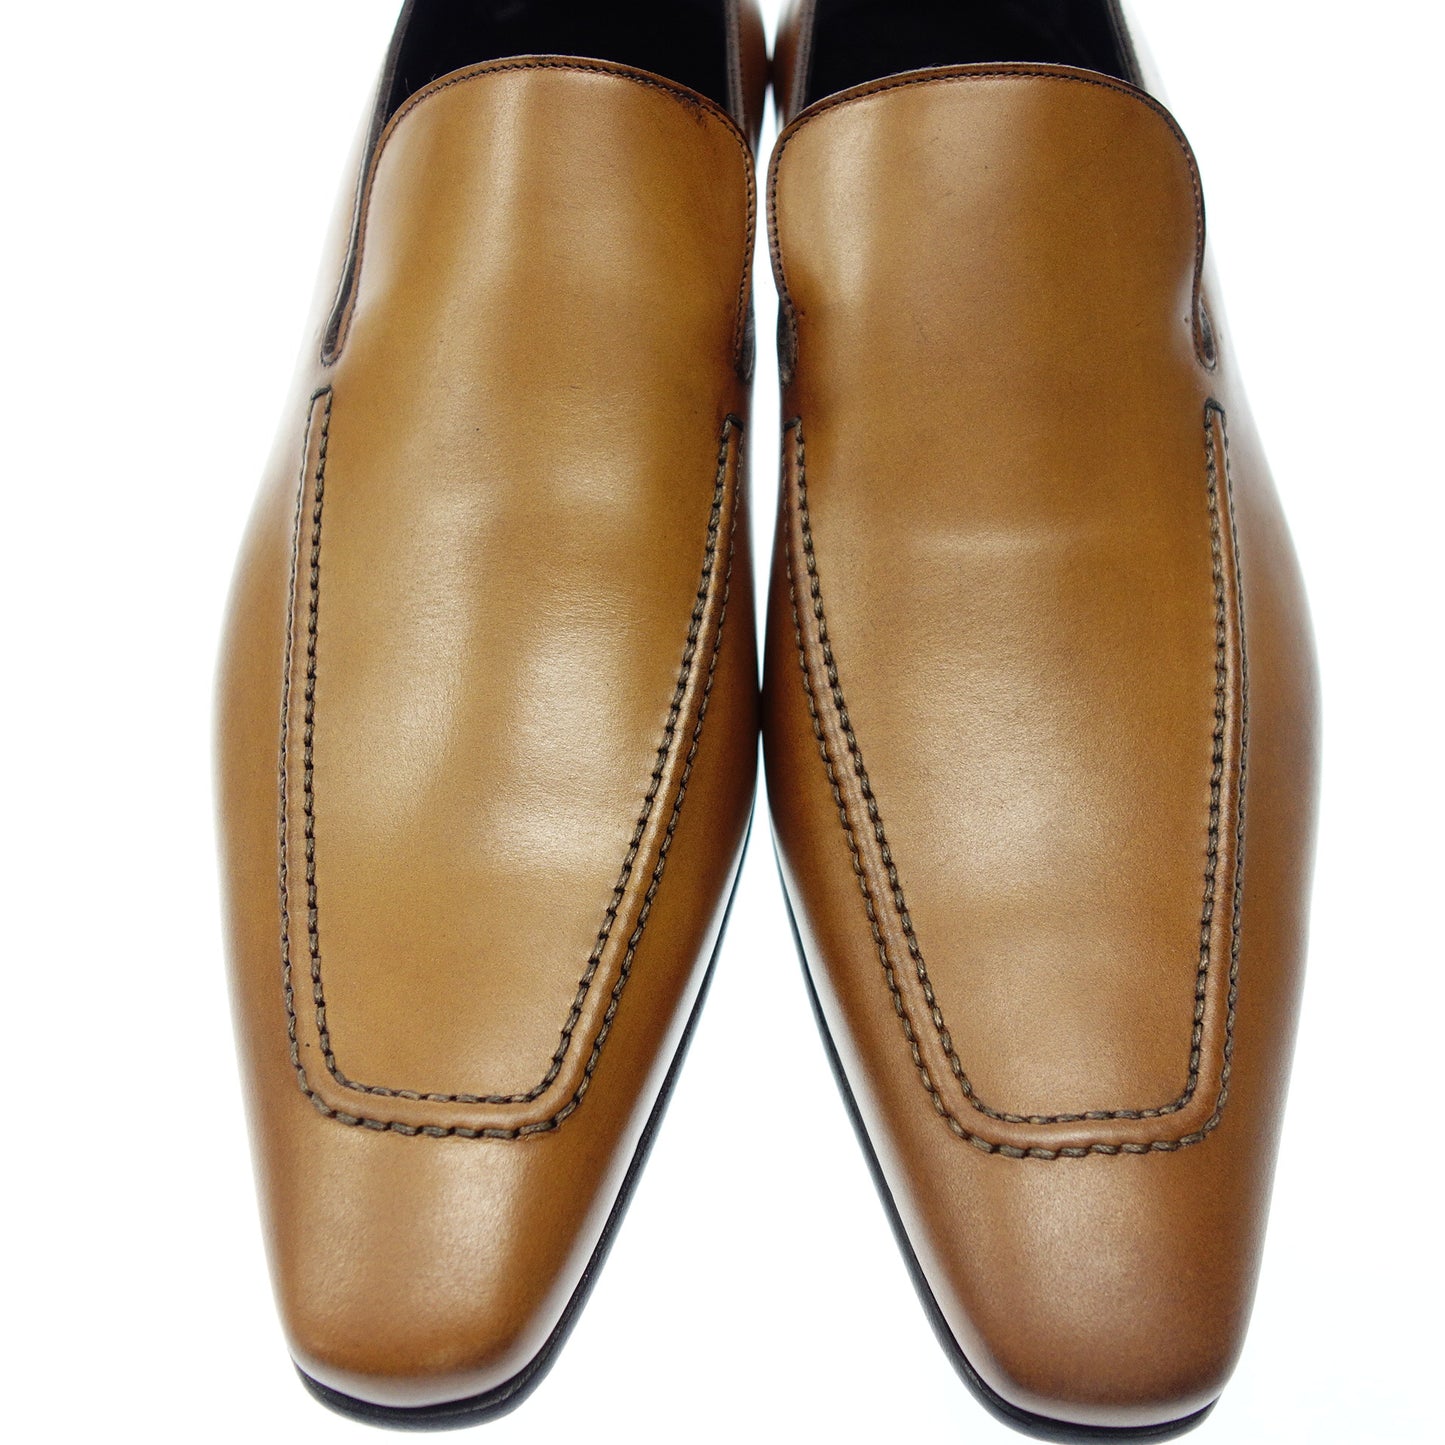 像全新一样 ◆ Dolce &amp; Gabbana 皮革乐福鞋 男士套穿 6.5 棕色 DOLCE&amp;GABBANA [AFD2] 